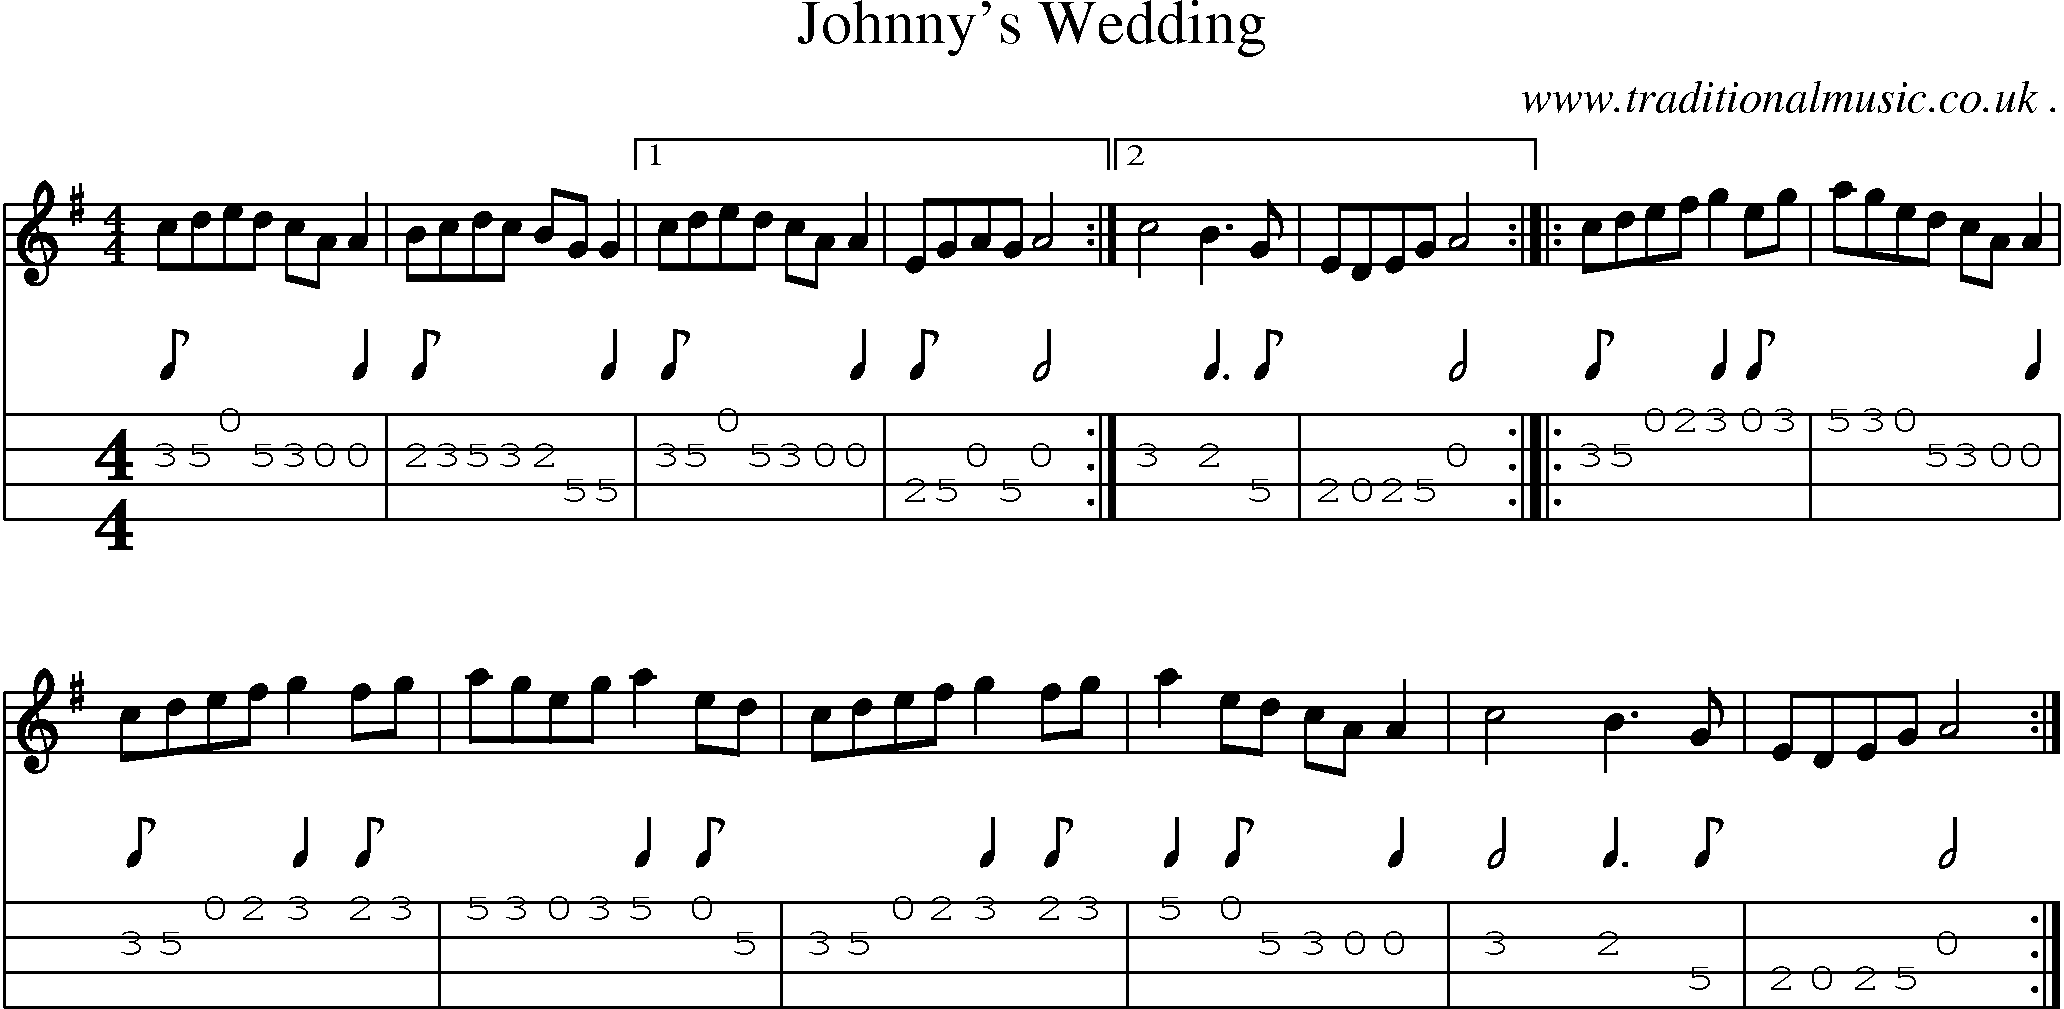 Sheet-Music and Mandolin Tabs for Johnnys Wedding